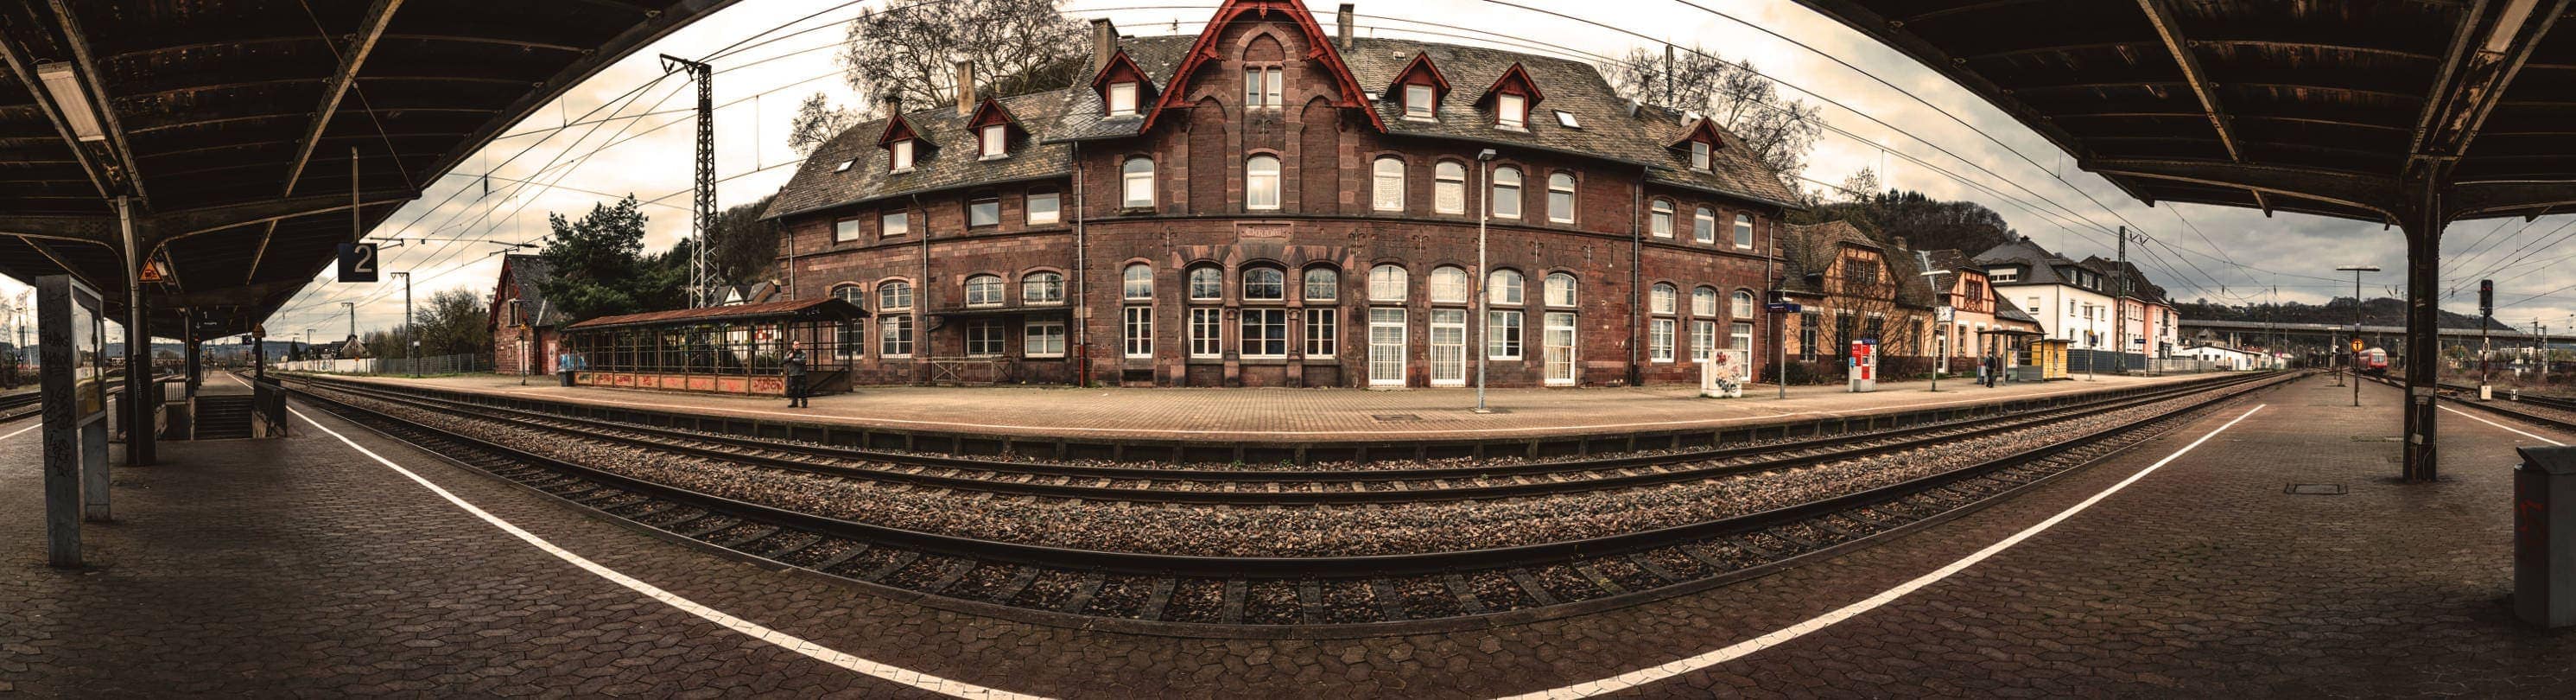 Panoramaaufnahme des Ehranger Bahnhofs